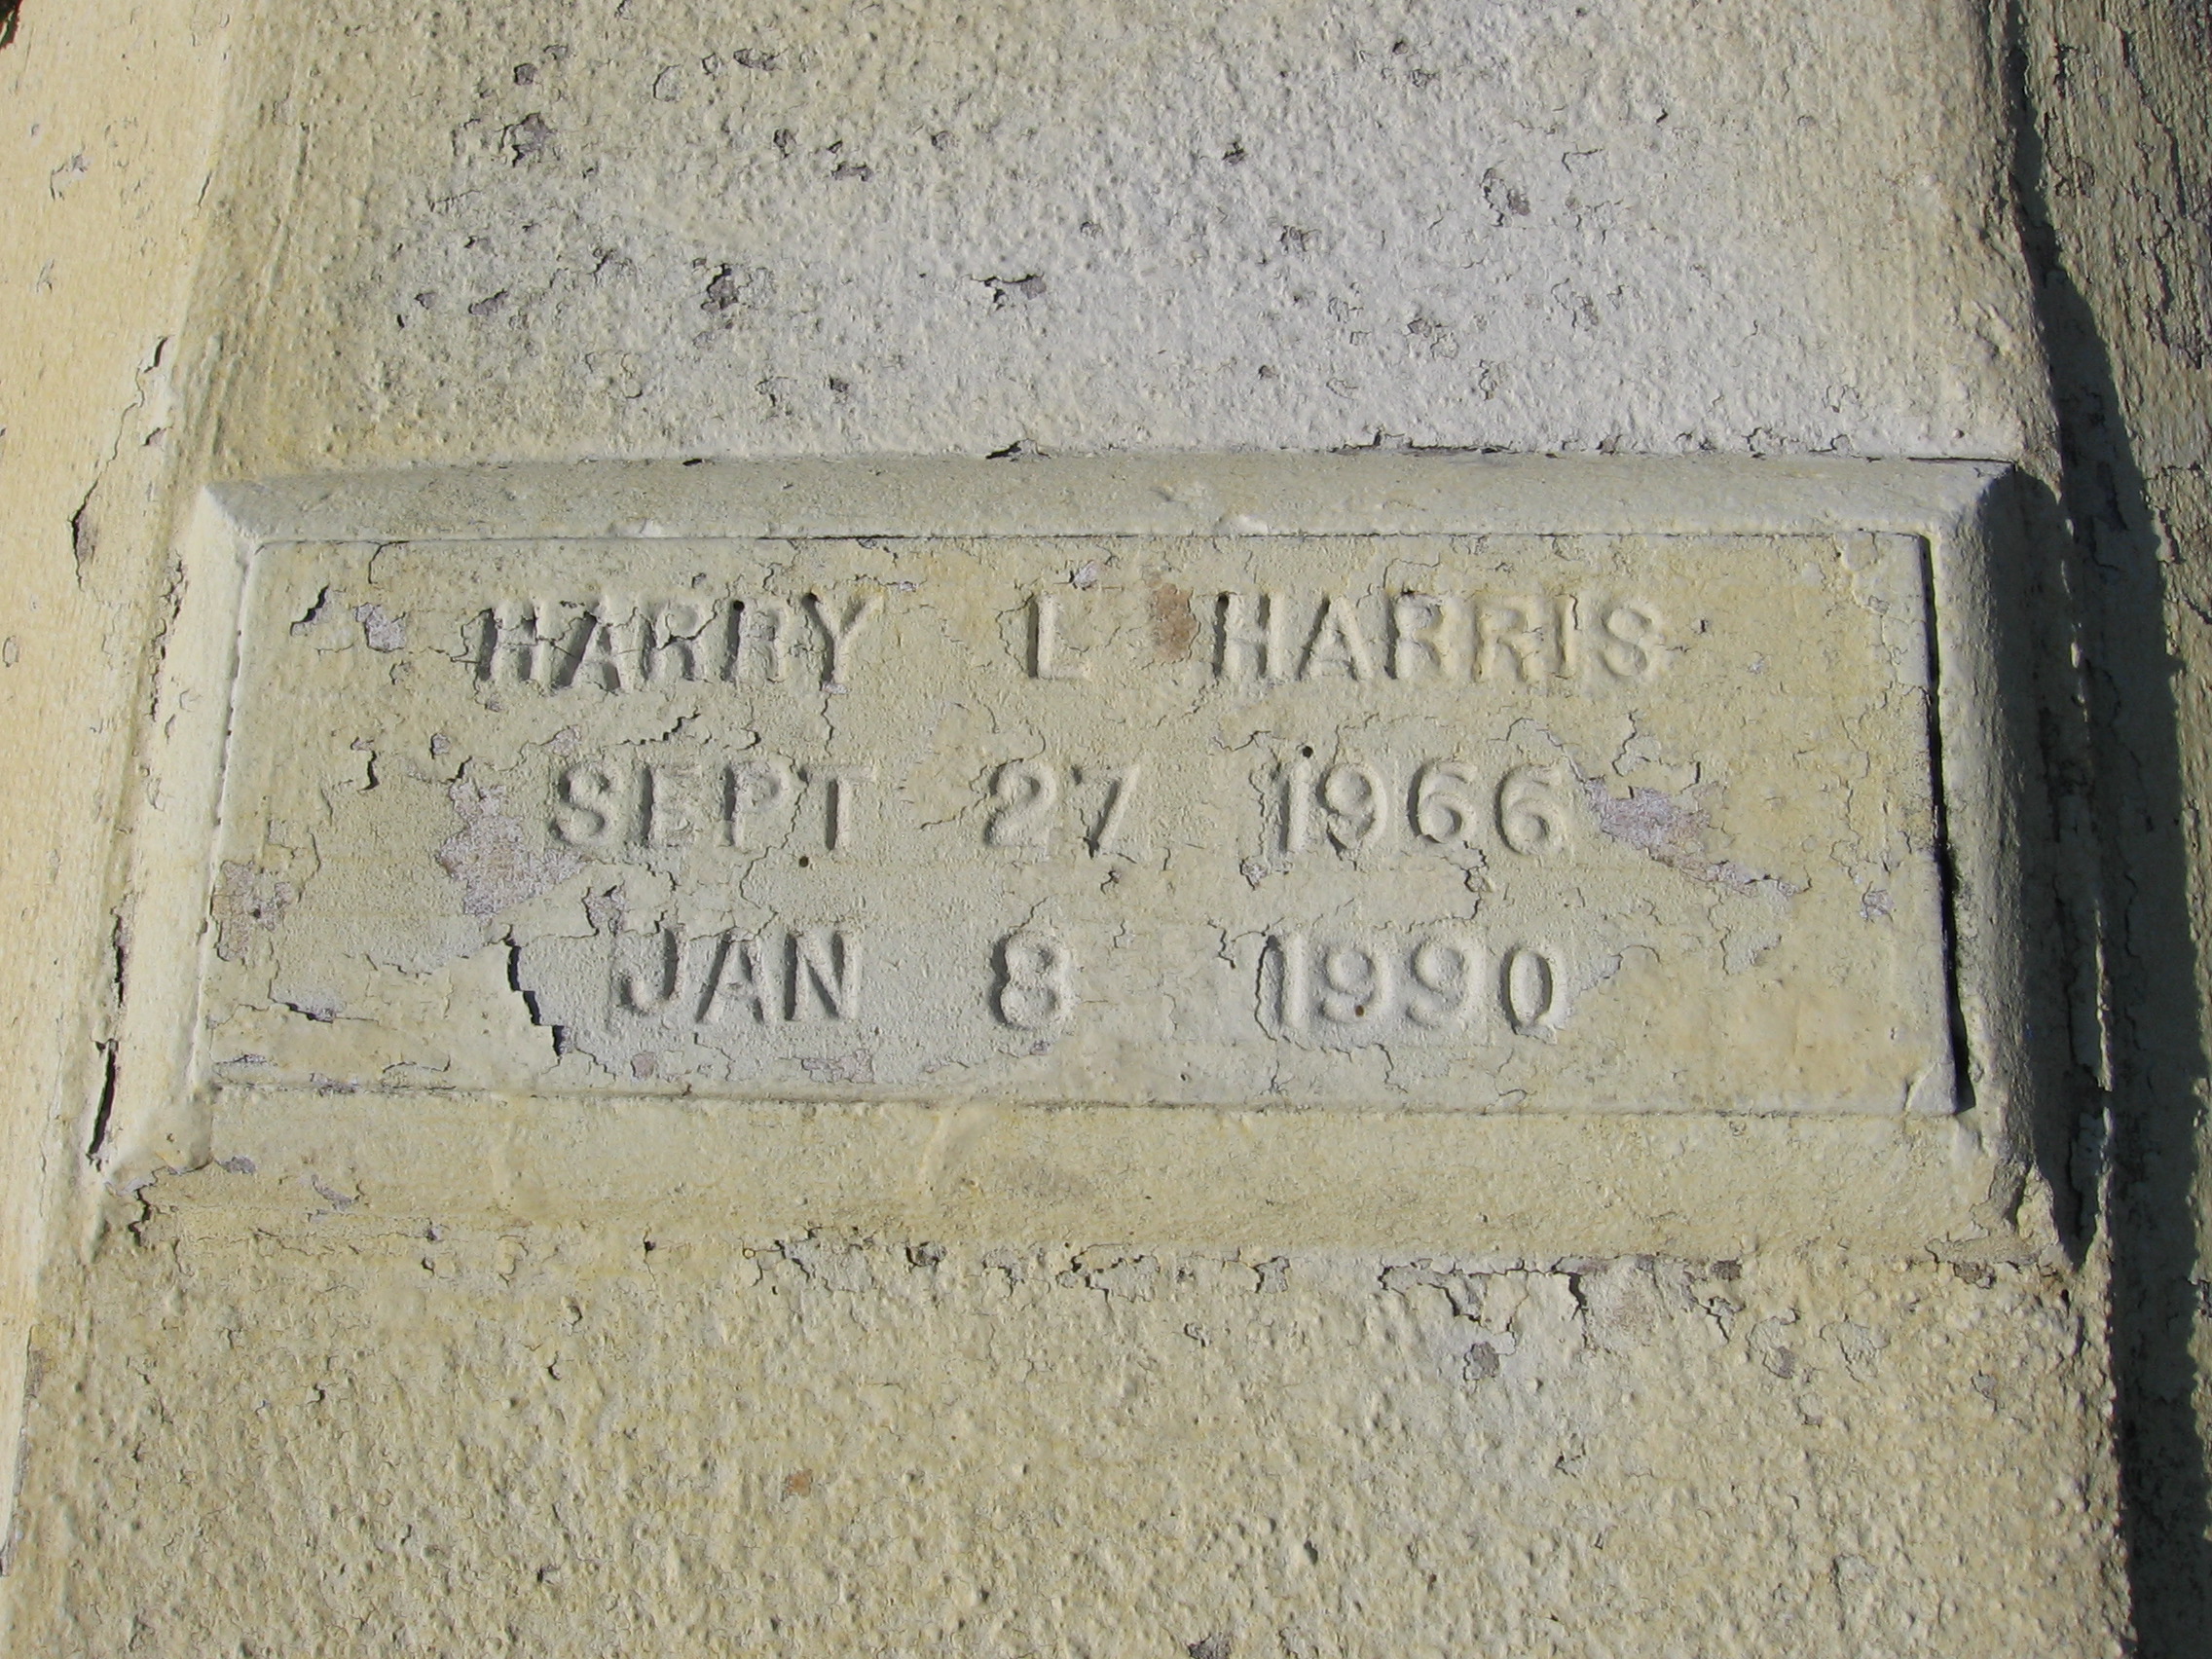 Harry L Harris